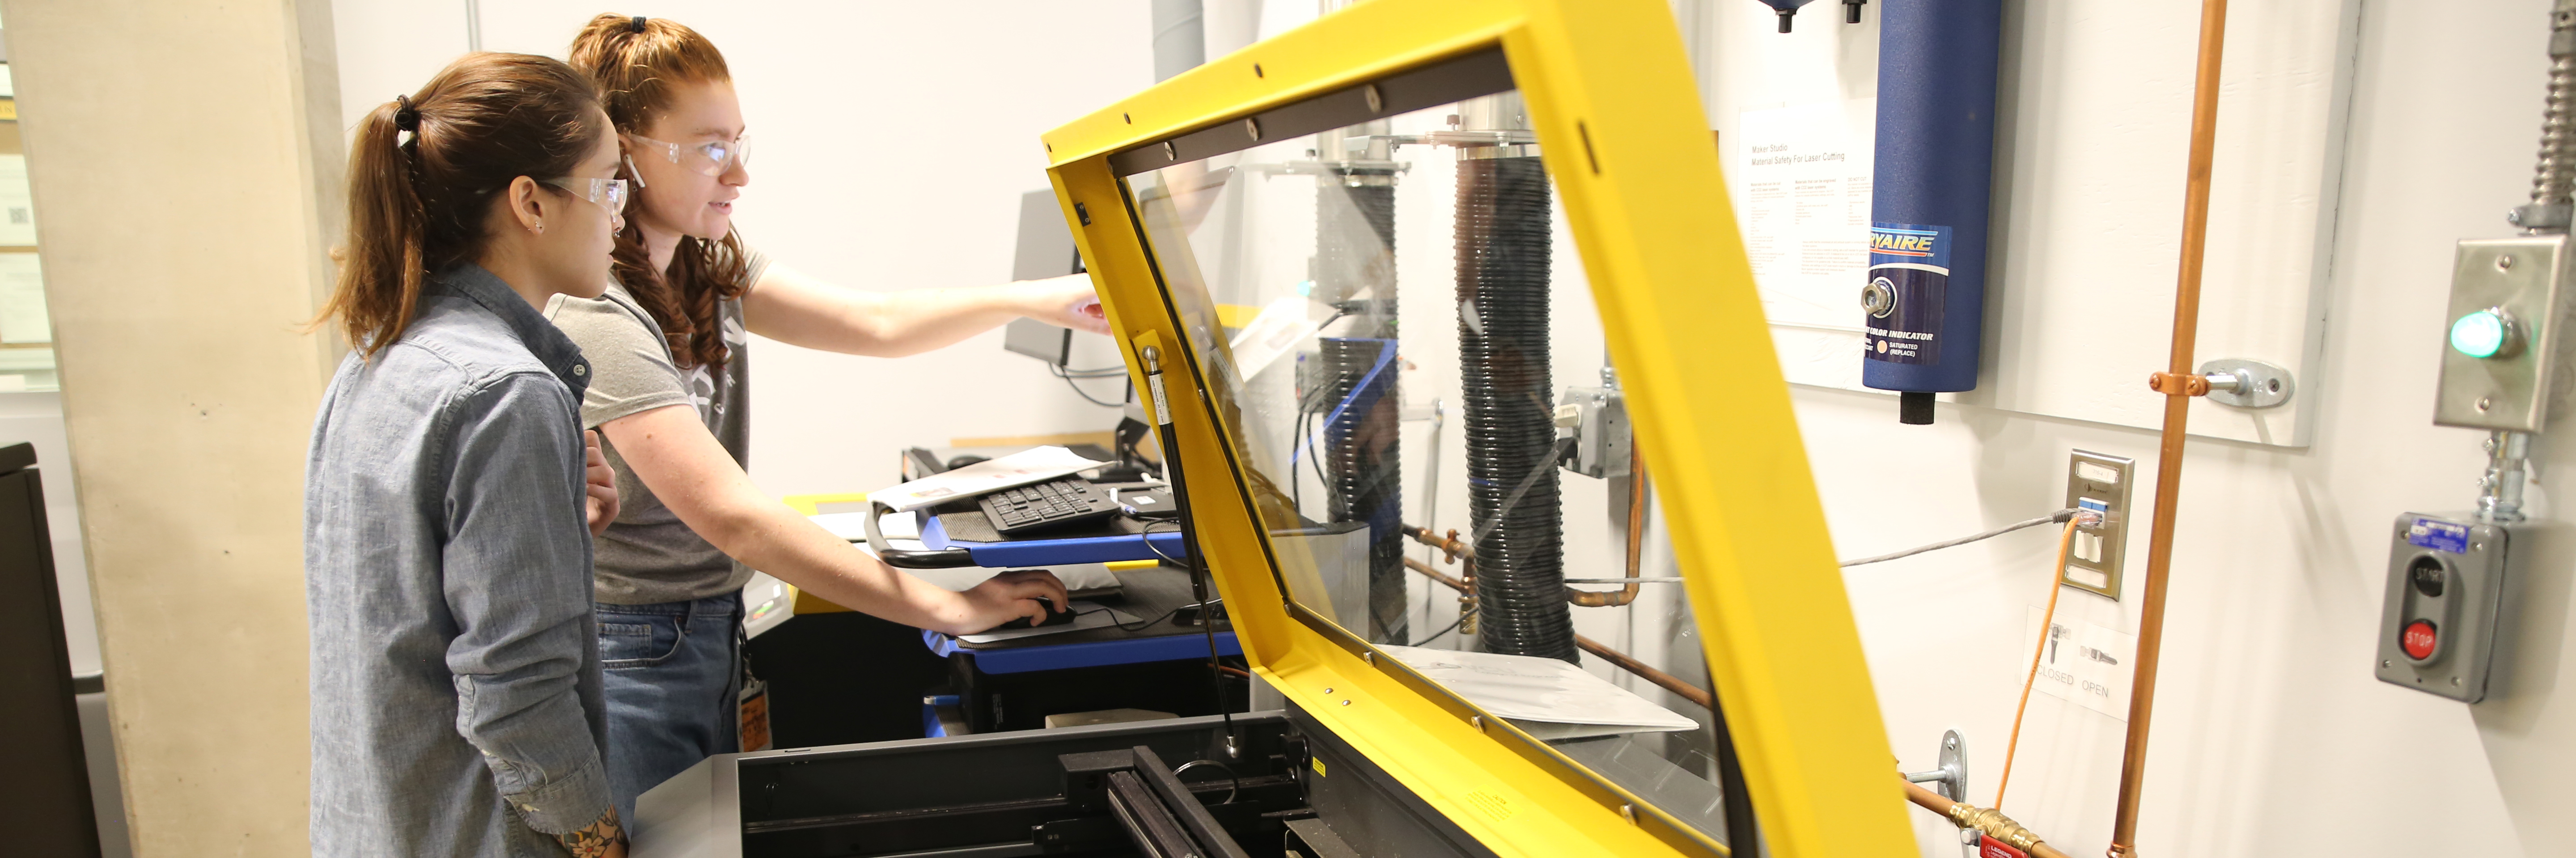 Photo of students looking at a 3D printer.